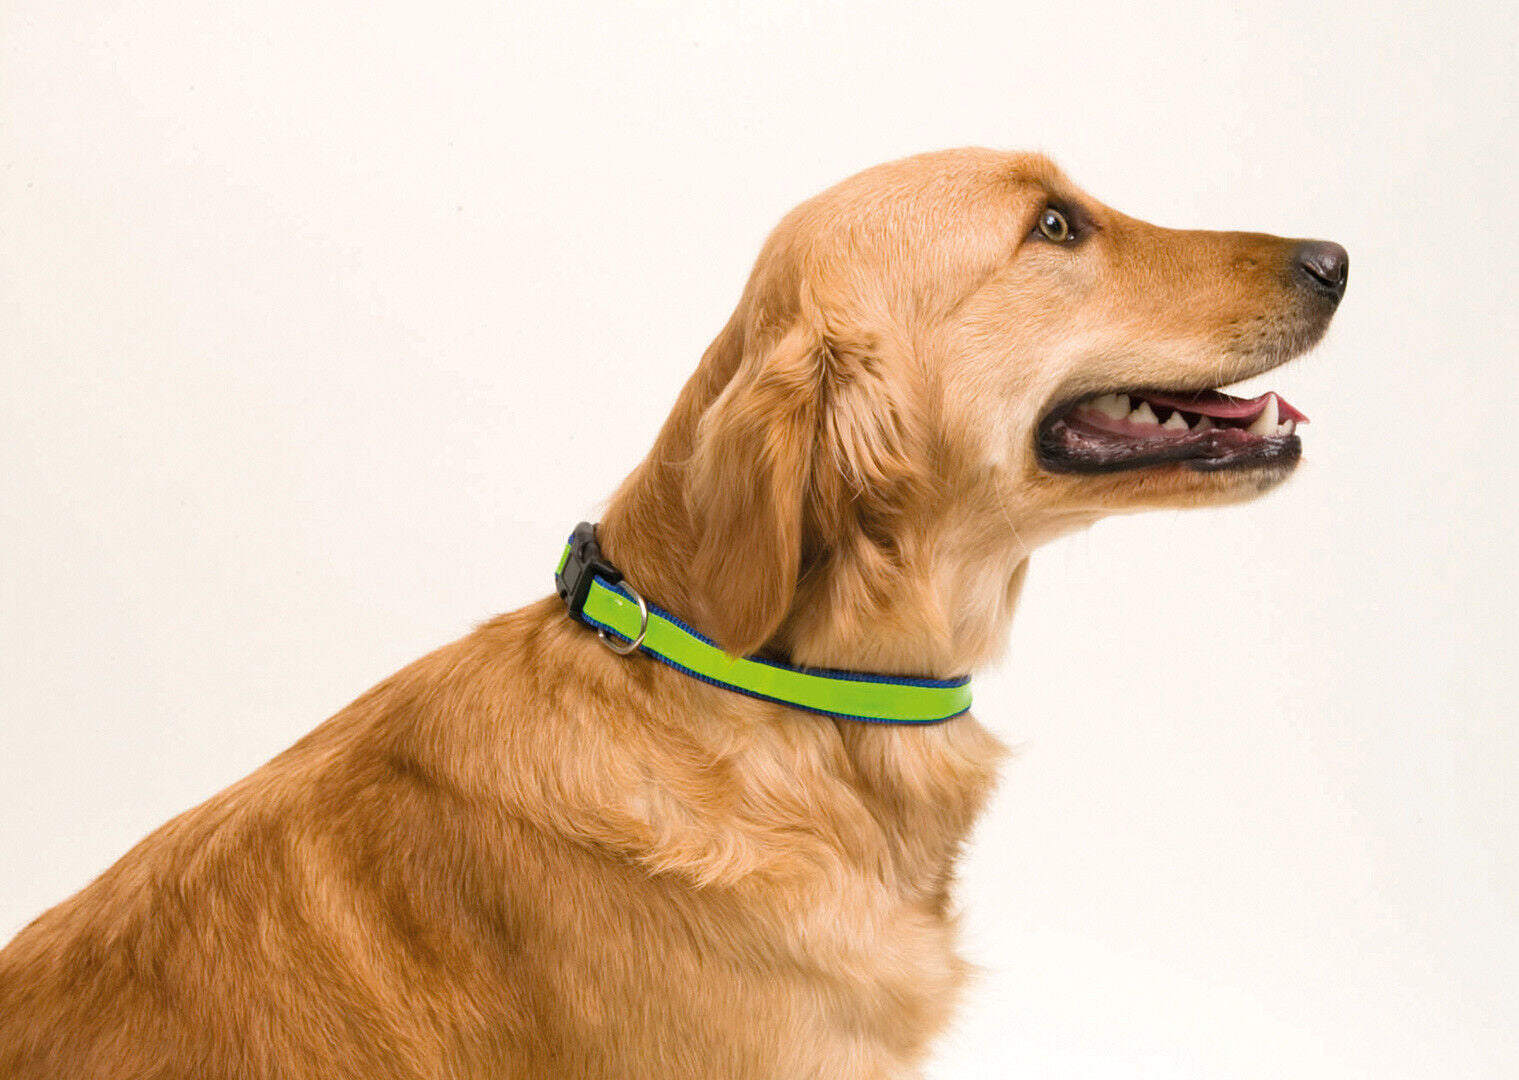 Reflective High Vis Dog Collar Adjustable Cat Safety Collars Night Walks UK